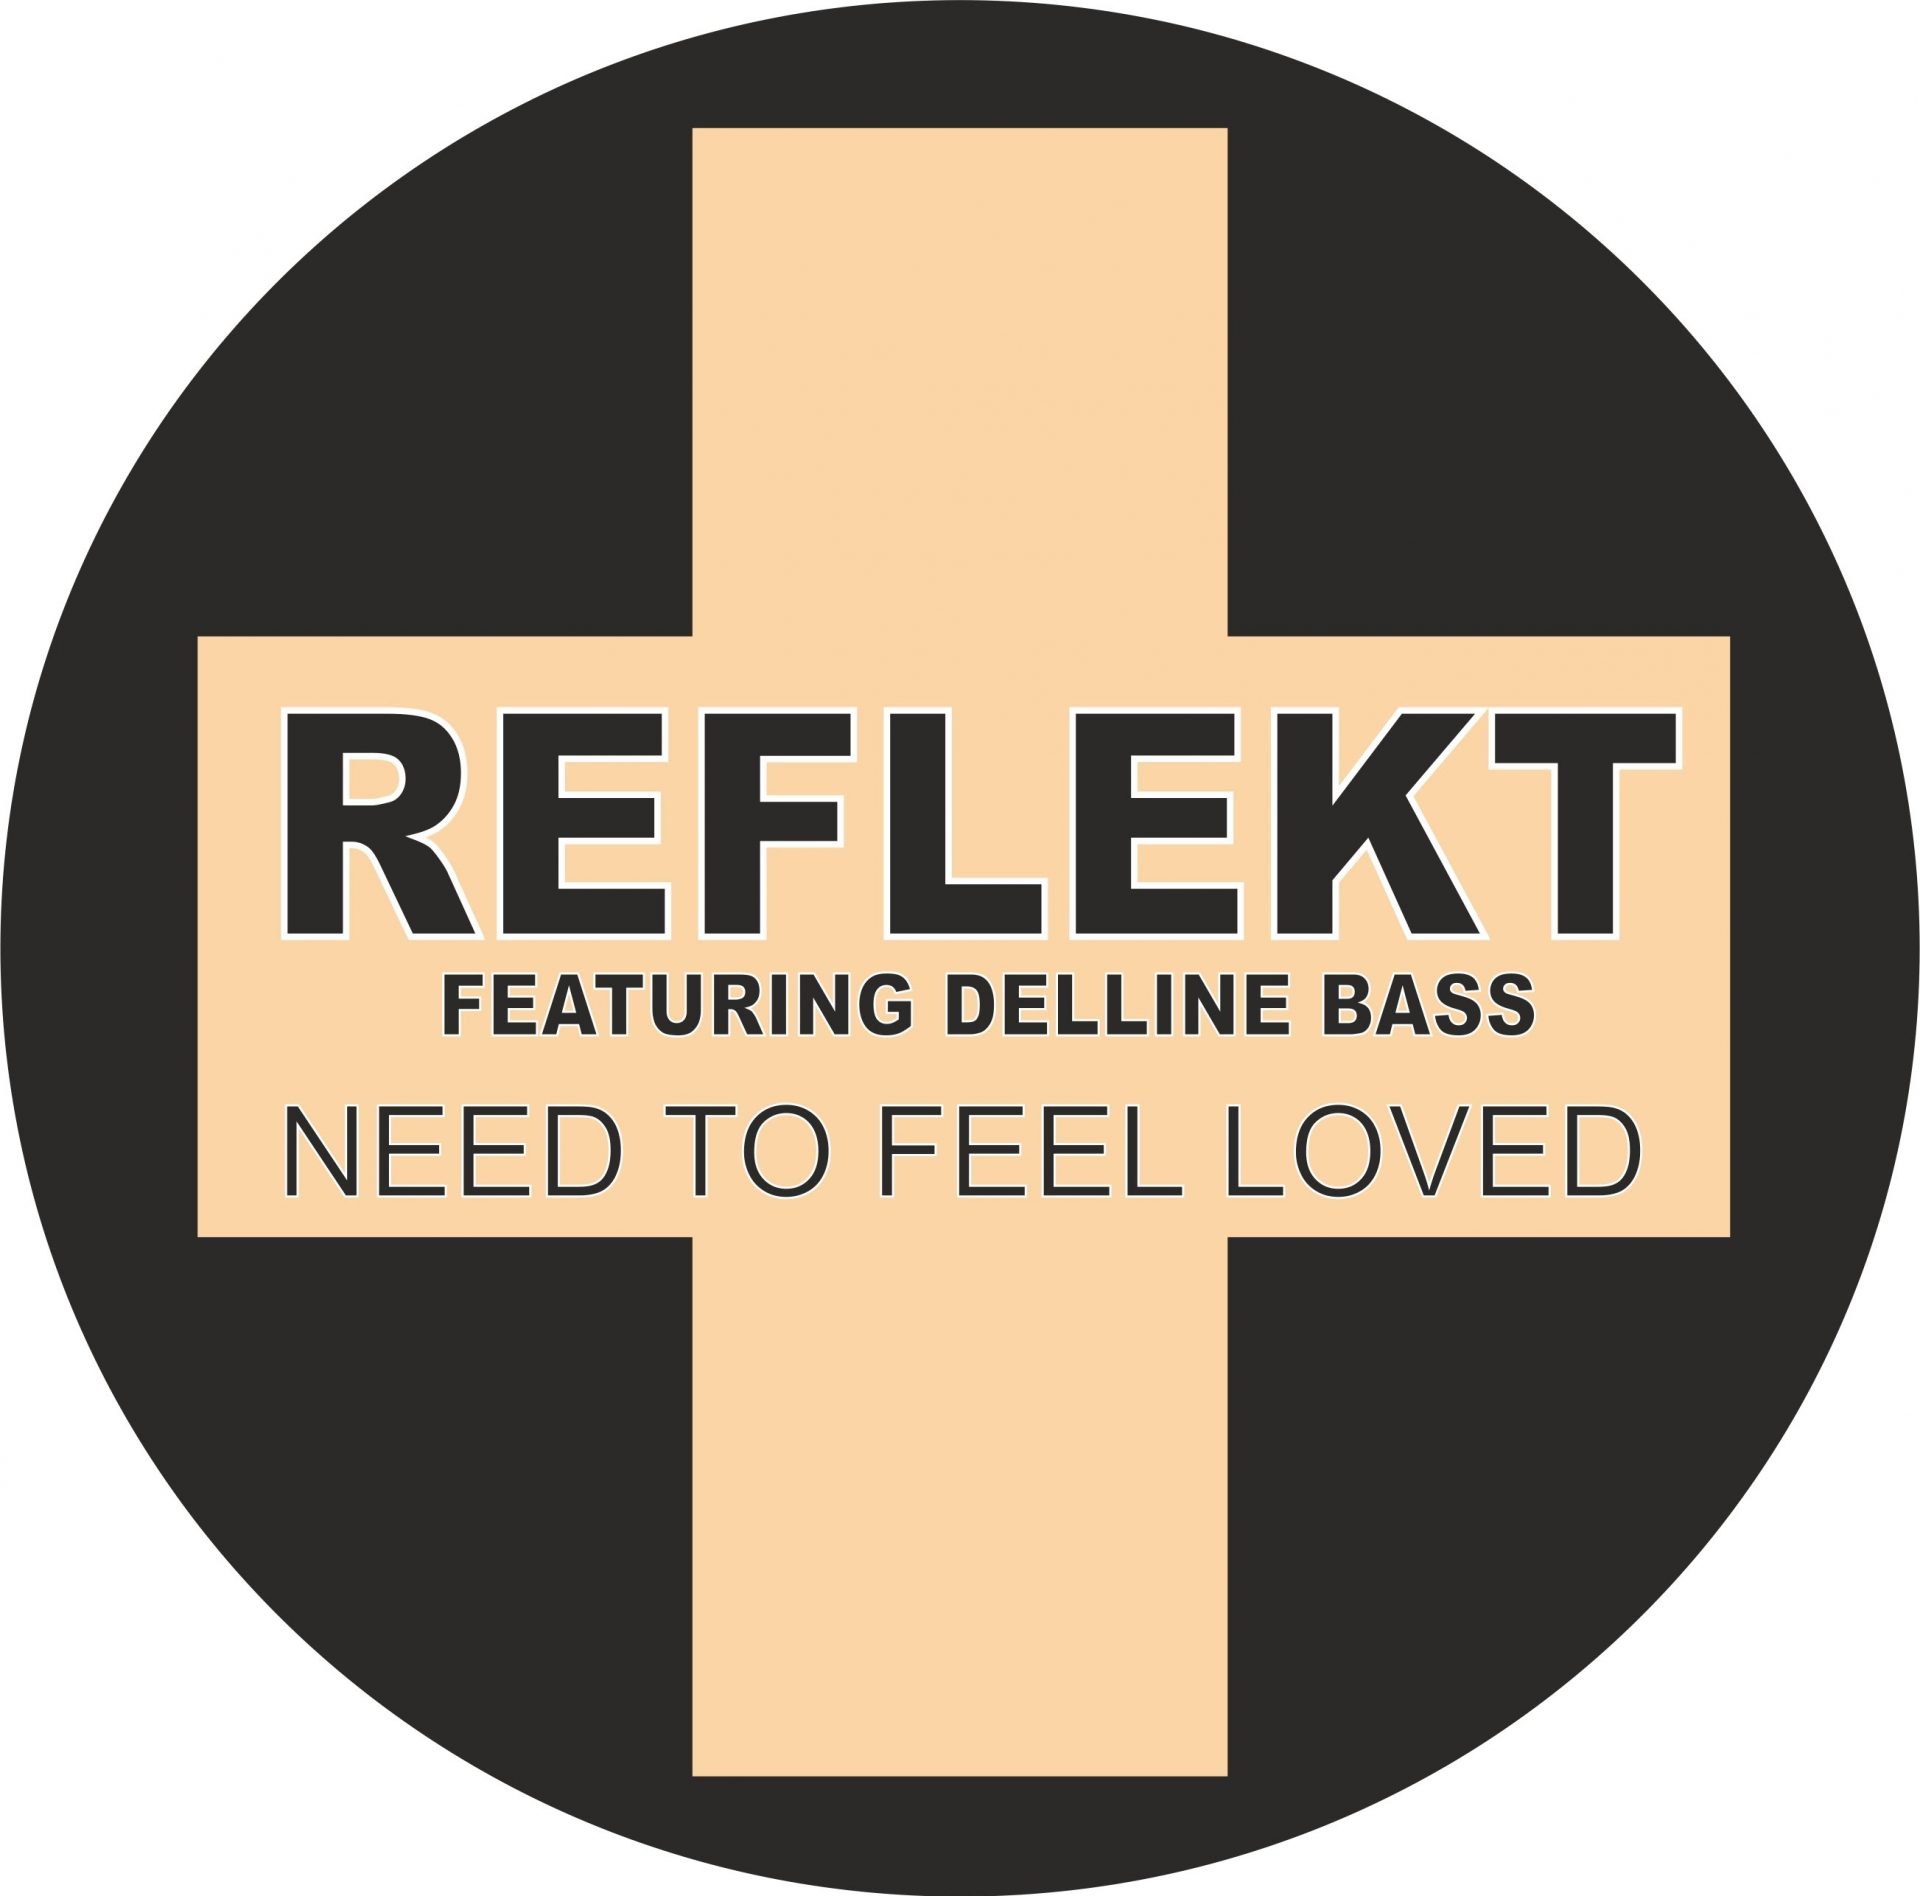 Reflekt need to feel loved. Reflekt ft. Delline Bass need to feel Loved. Reflekt feat Delline Bass. Adam k Soha need to feel Loved.